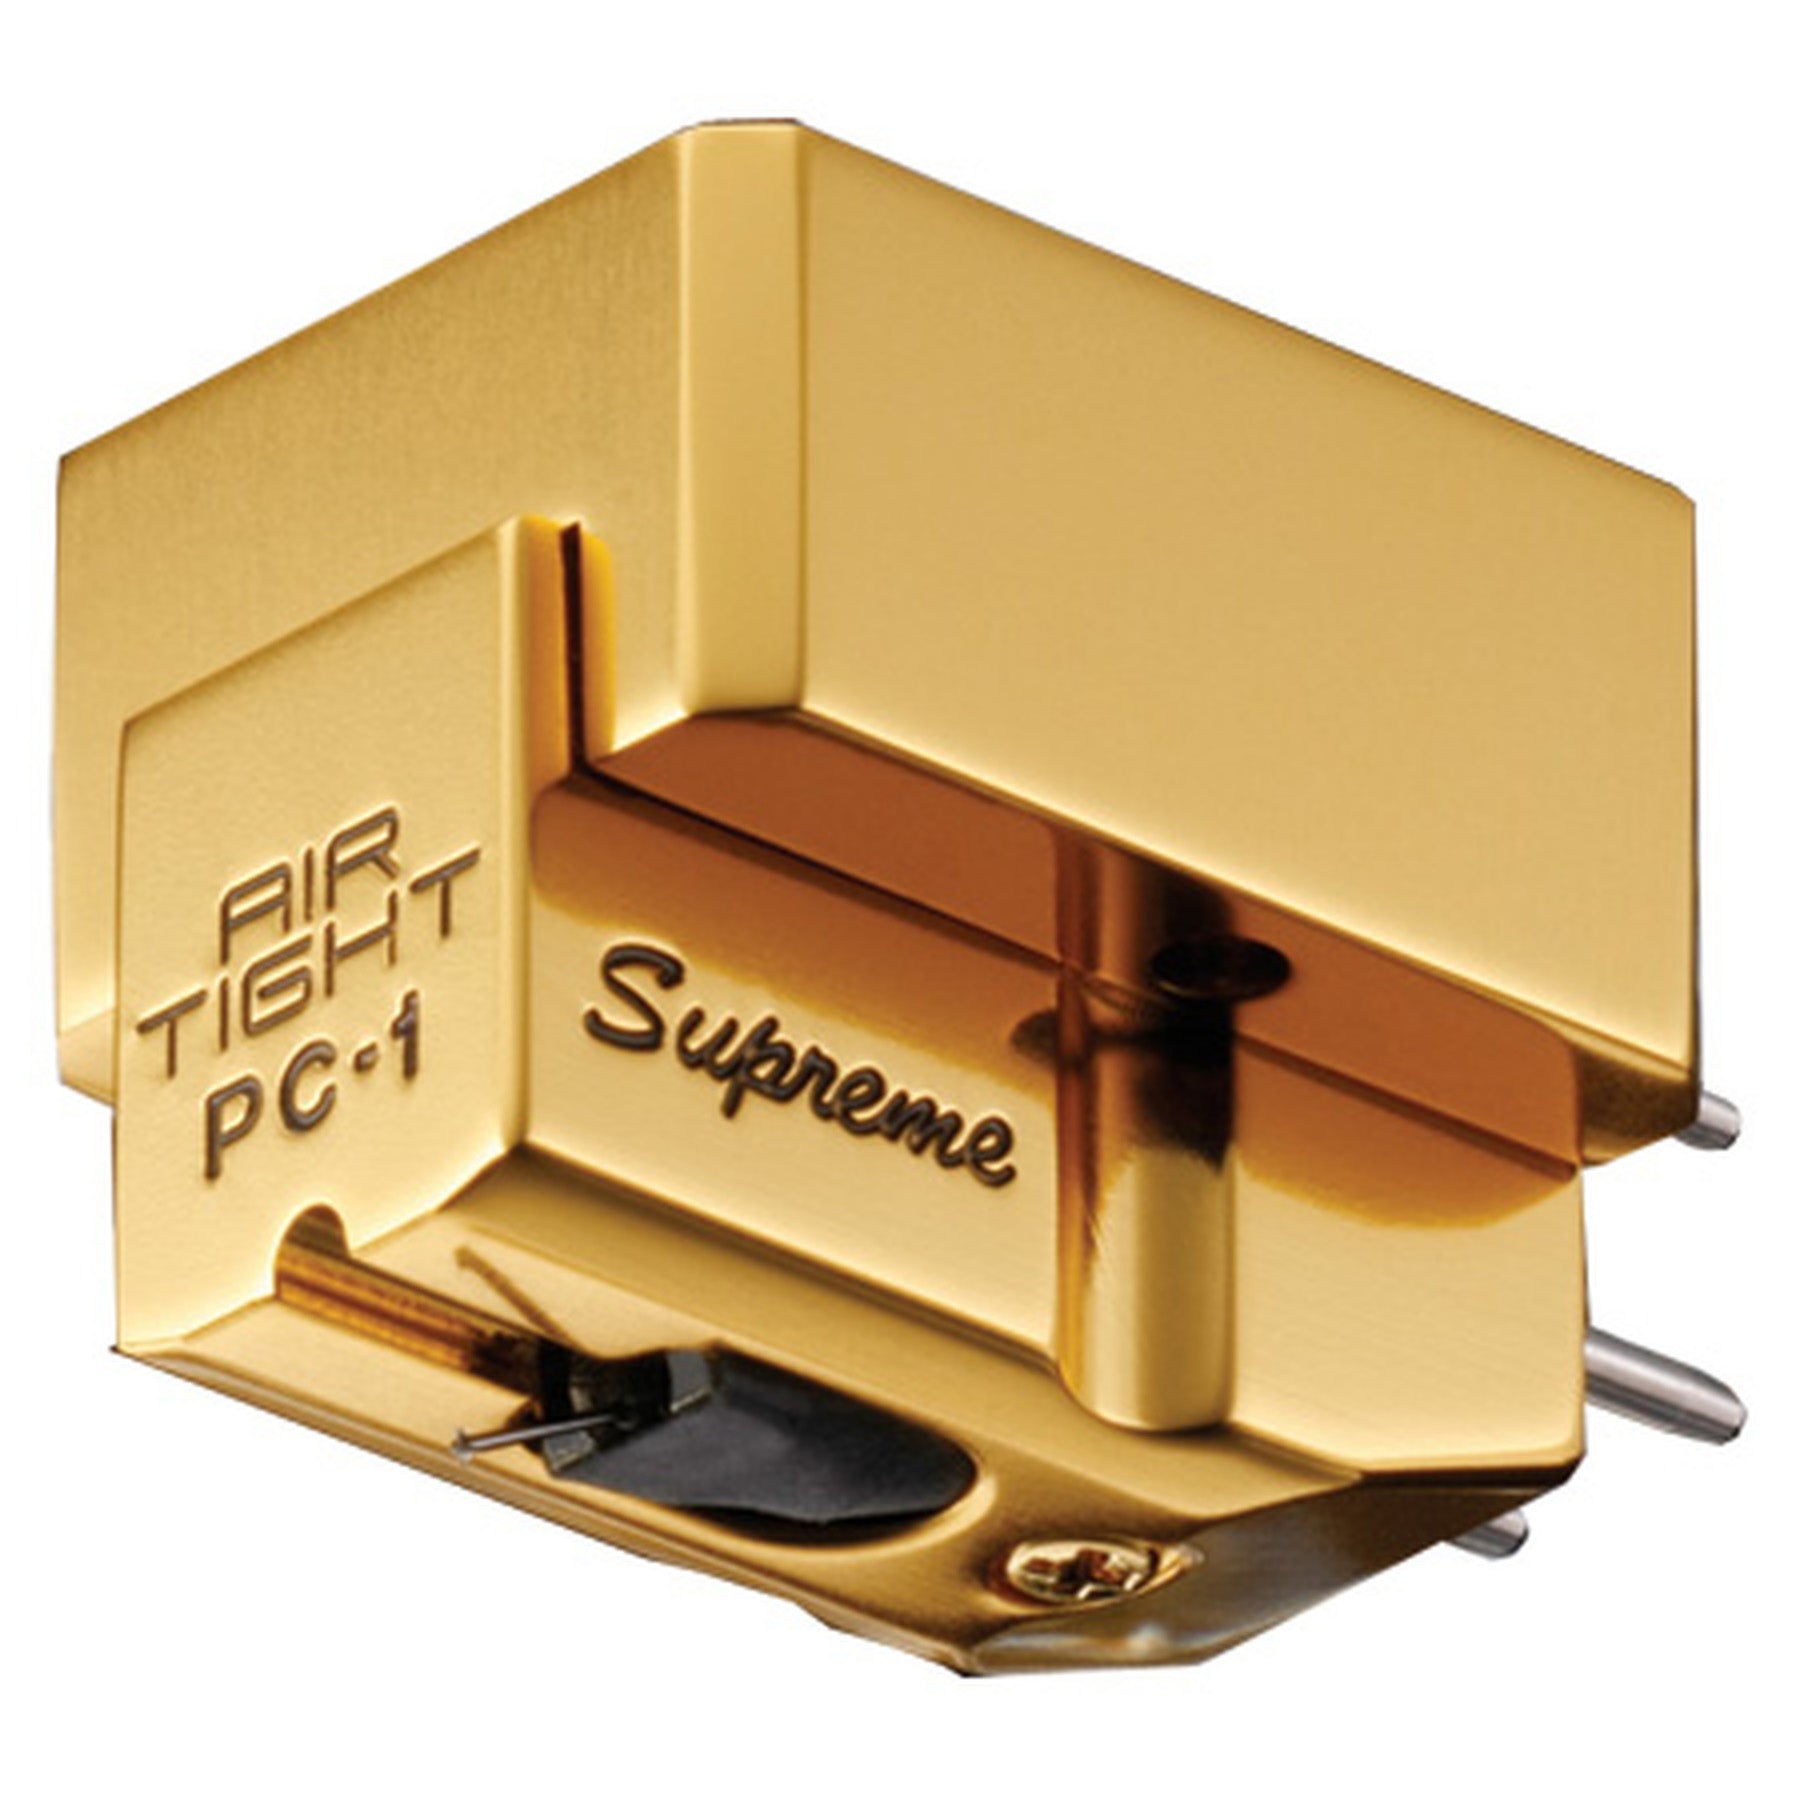 Air Tight PC-1 Supreme Mono MC Phono Cartridge